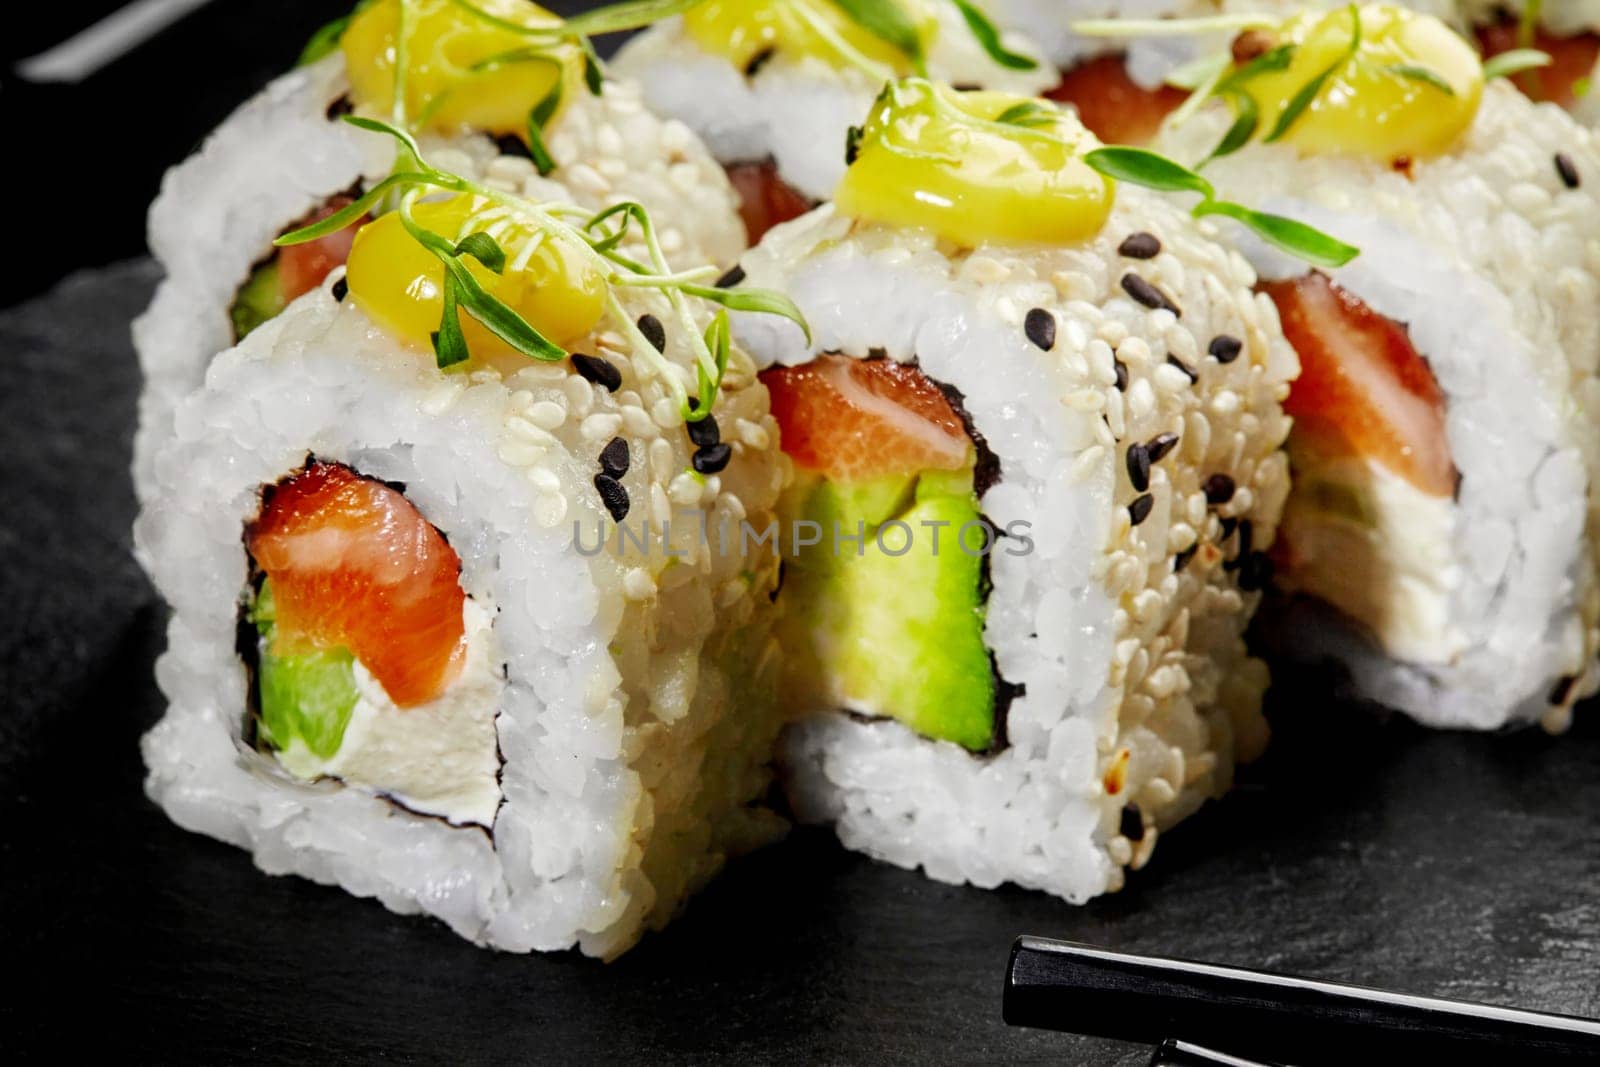 Sesame coated sushi rolls with salmon, avocado and sauce by nazarovsergey